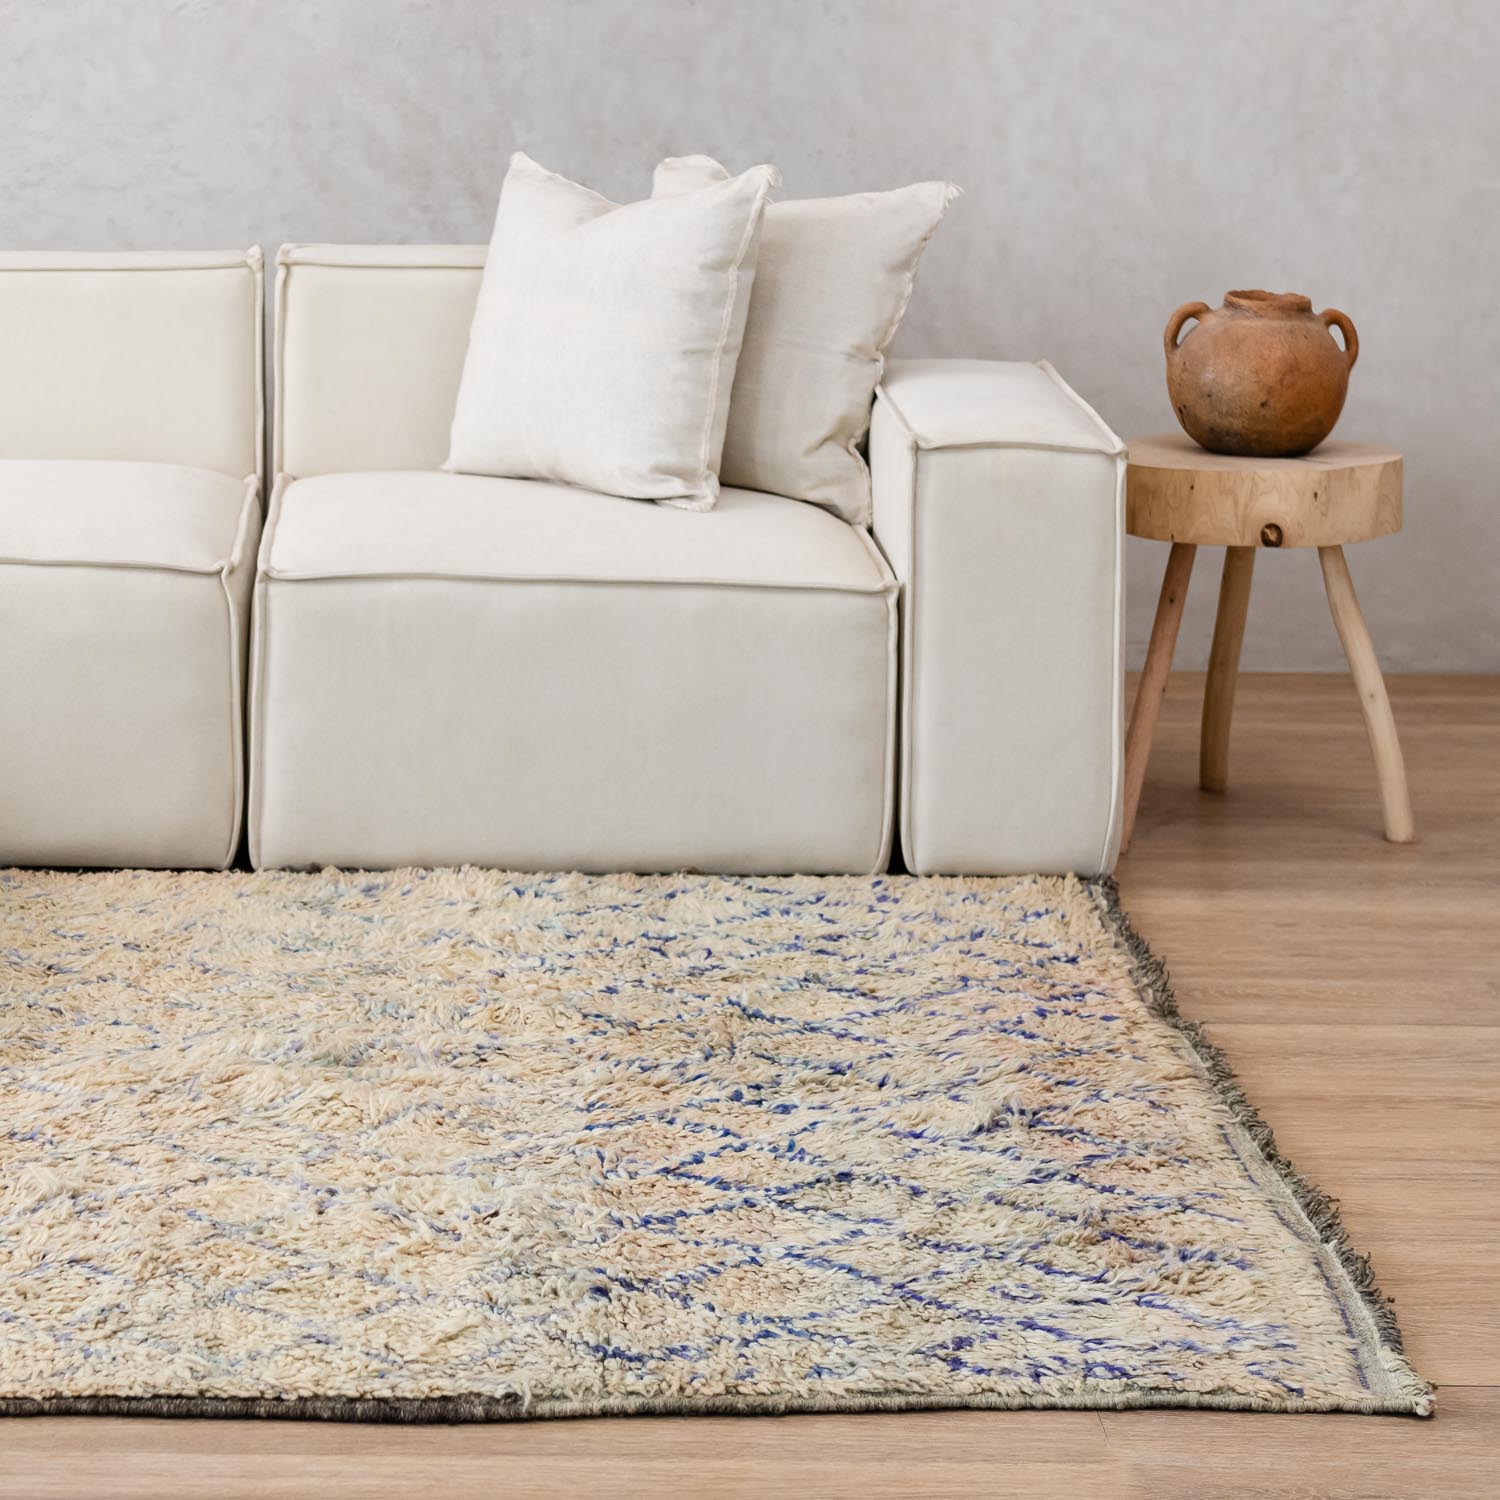 Mejdan - Vintage Moroccan rug